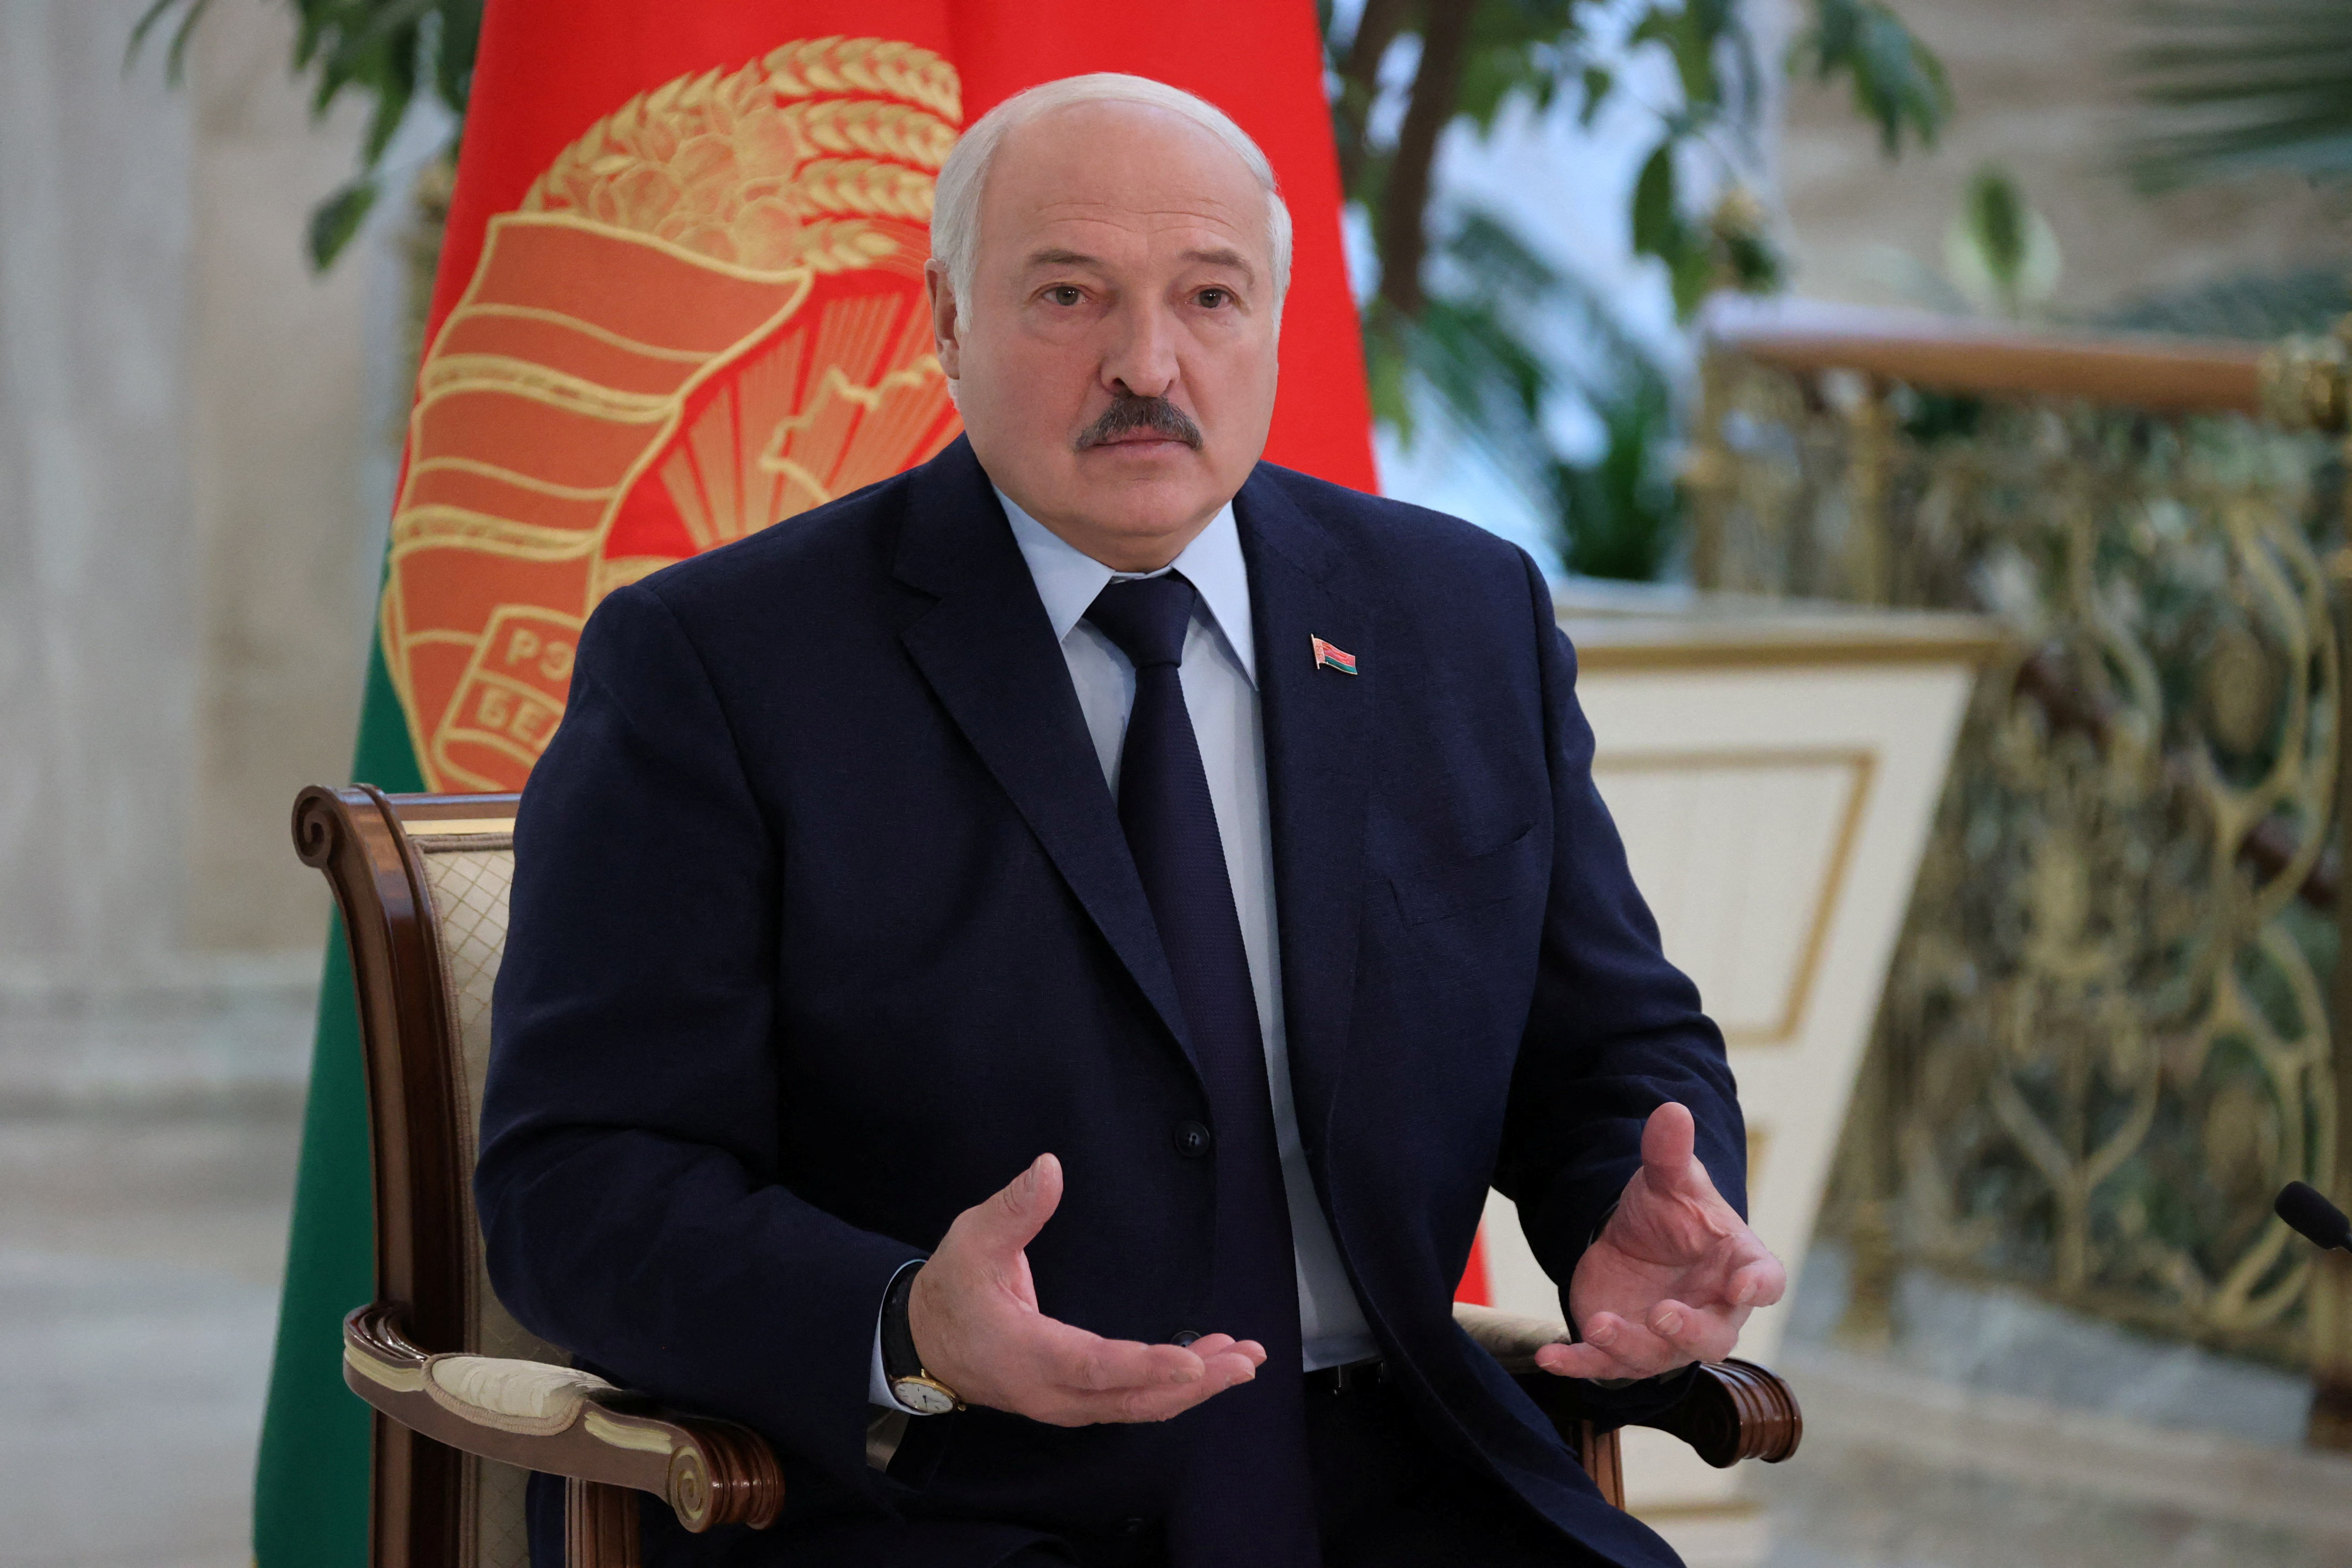 Belarus' President Lukashenko attends a news conference in Minsk